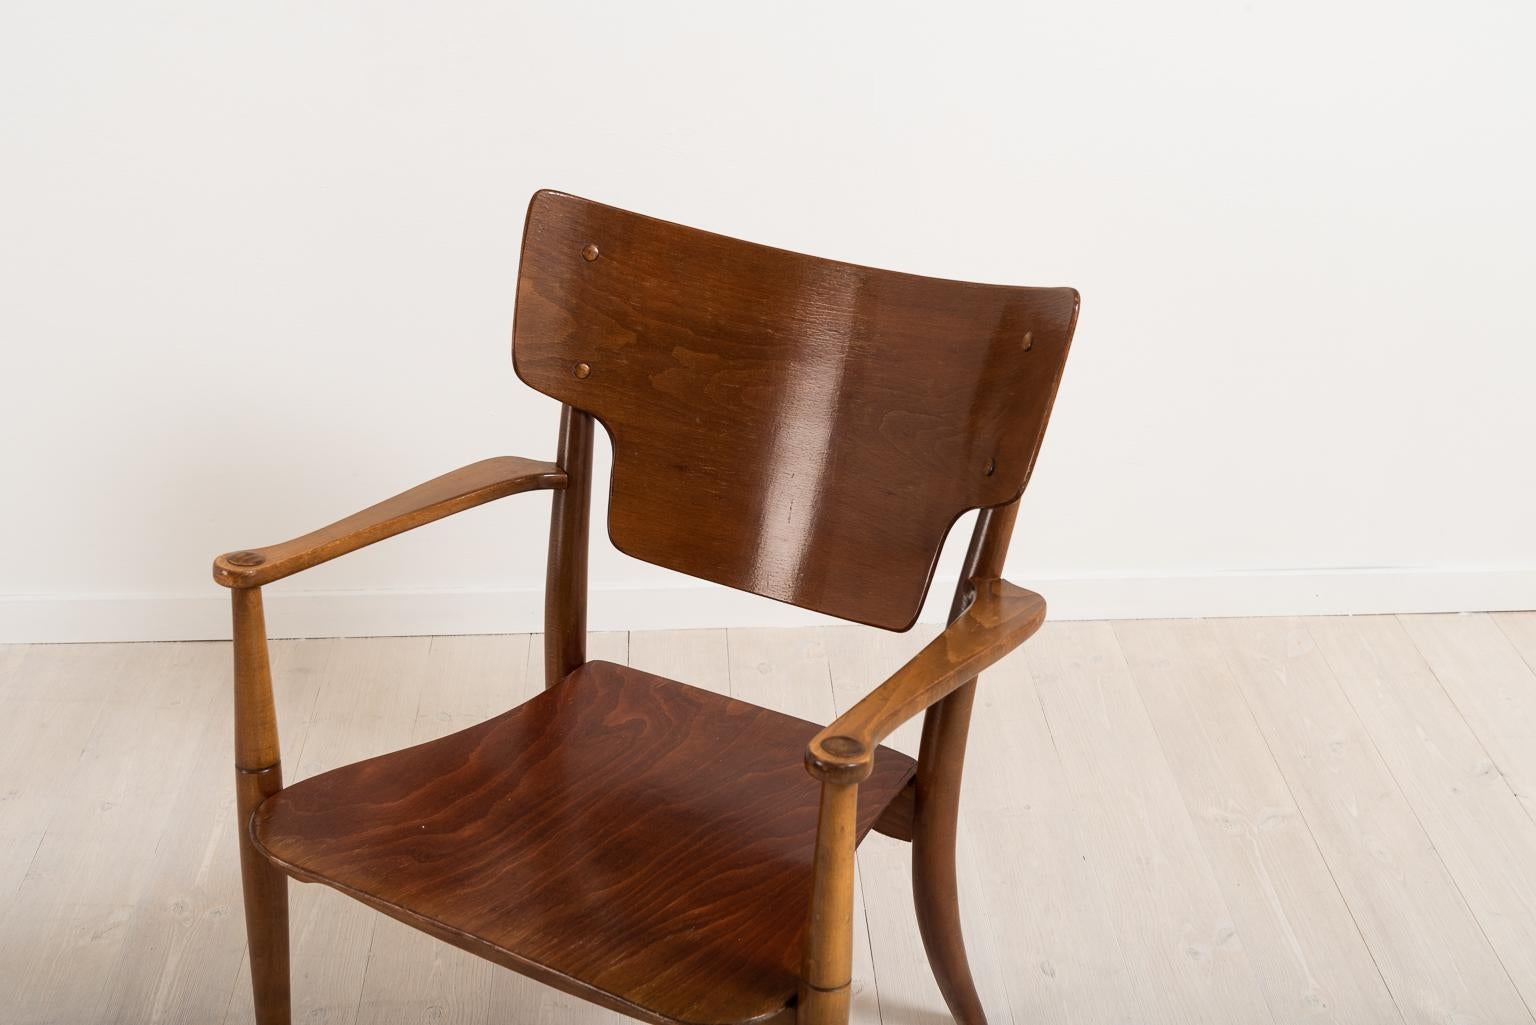 Chair 'Portex' Designed 1944 by Peter Hvidt and Orla Molgaard-Nielsen 1